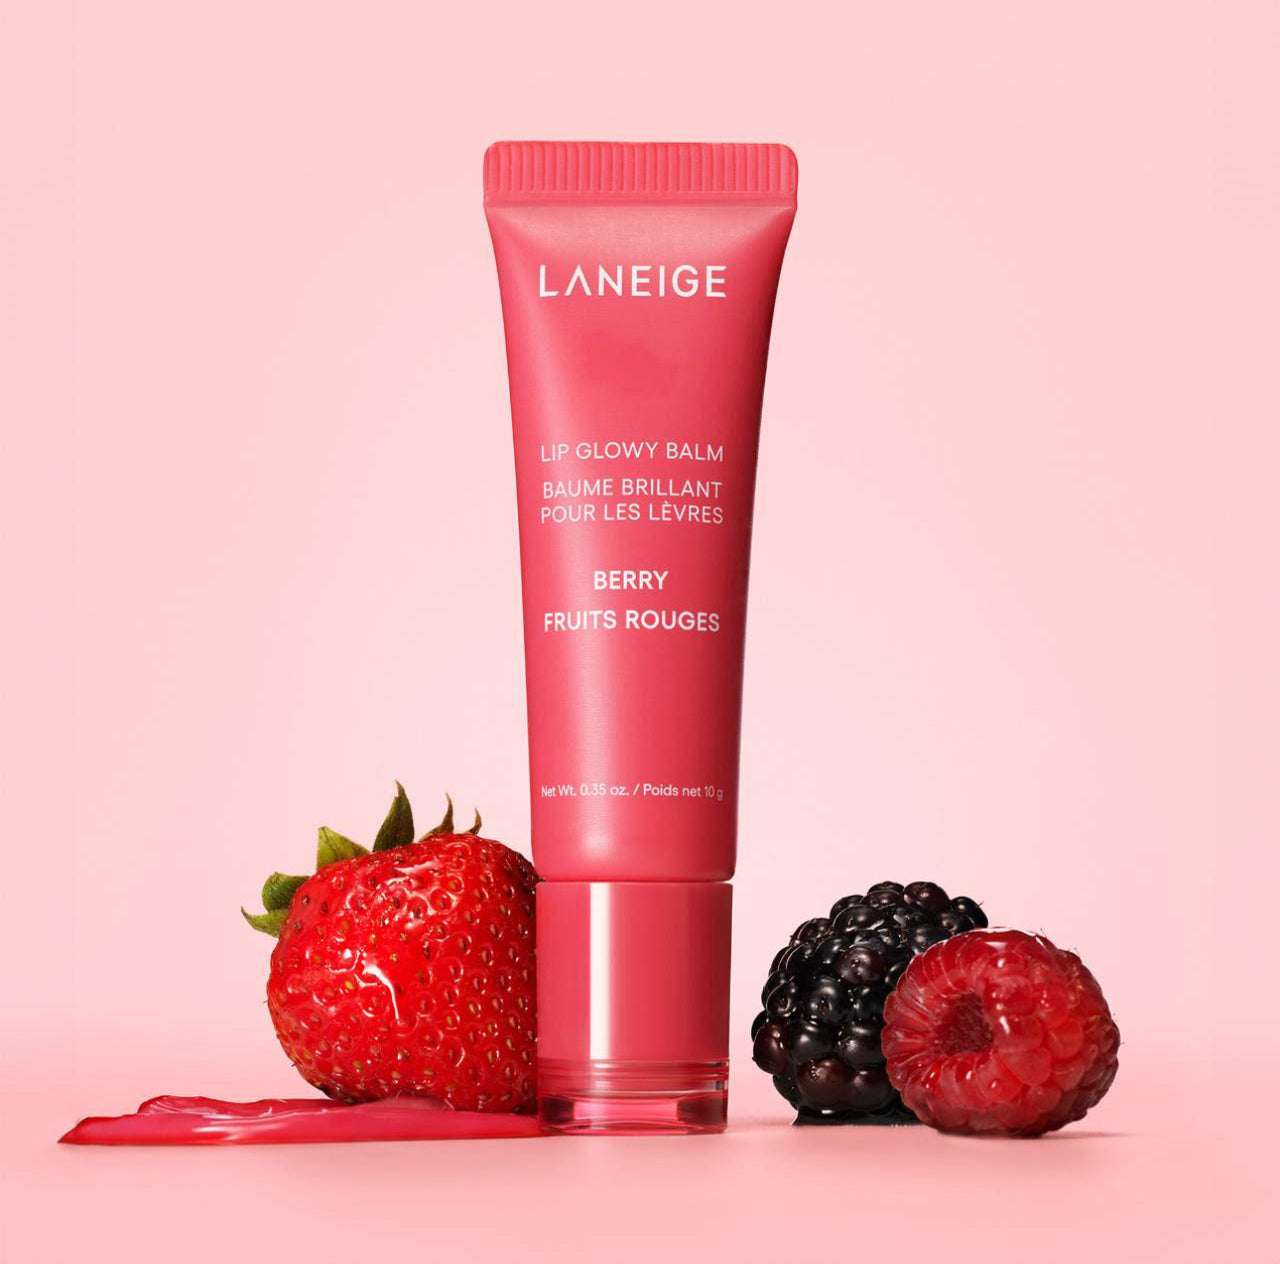 Laneige “Berry” Tinted Glowy Lip Balm